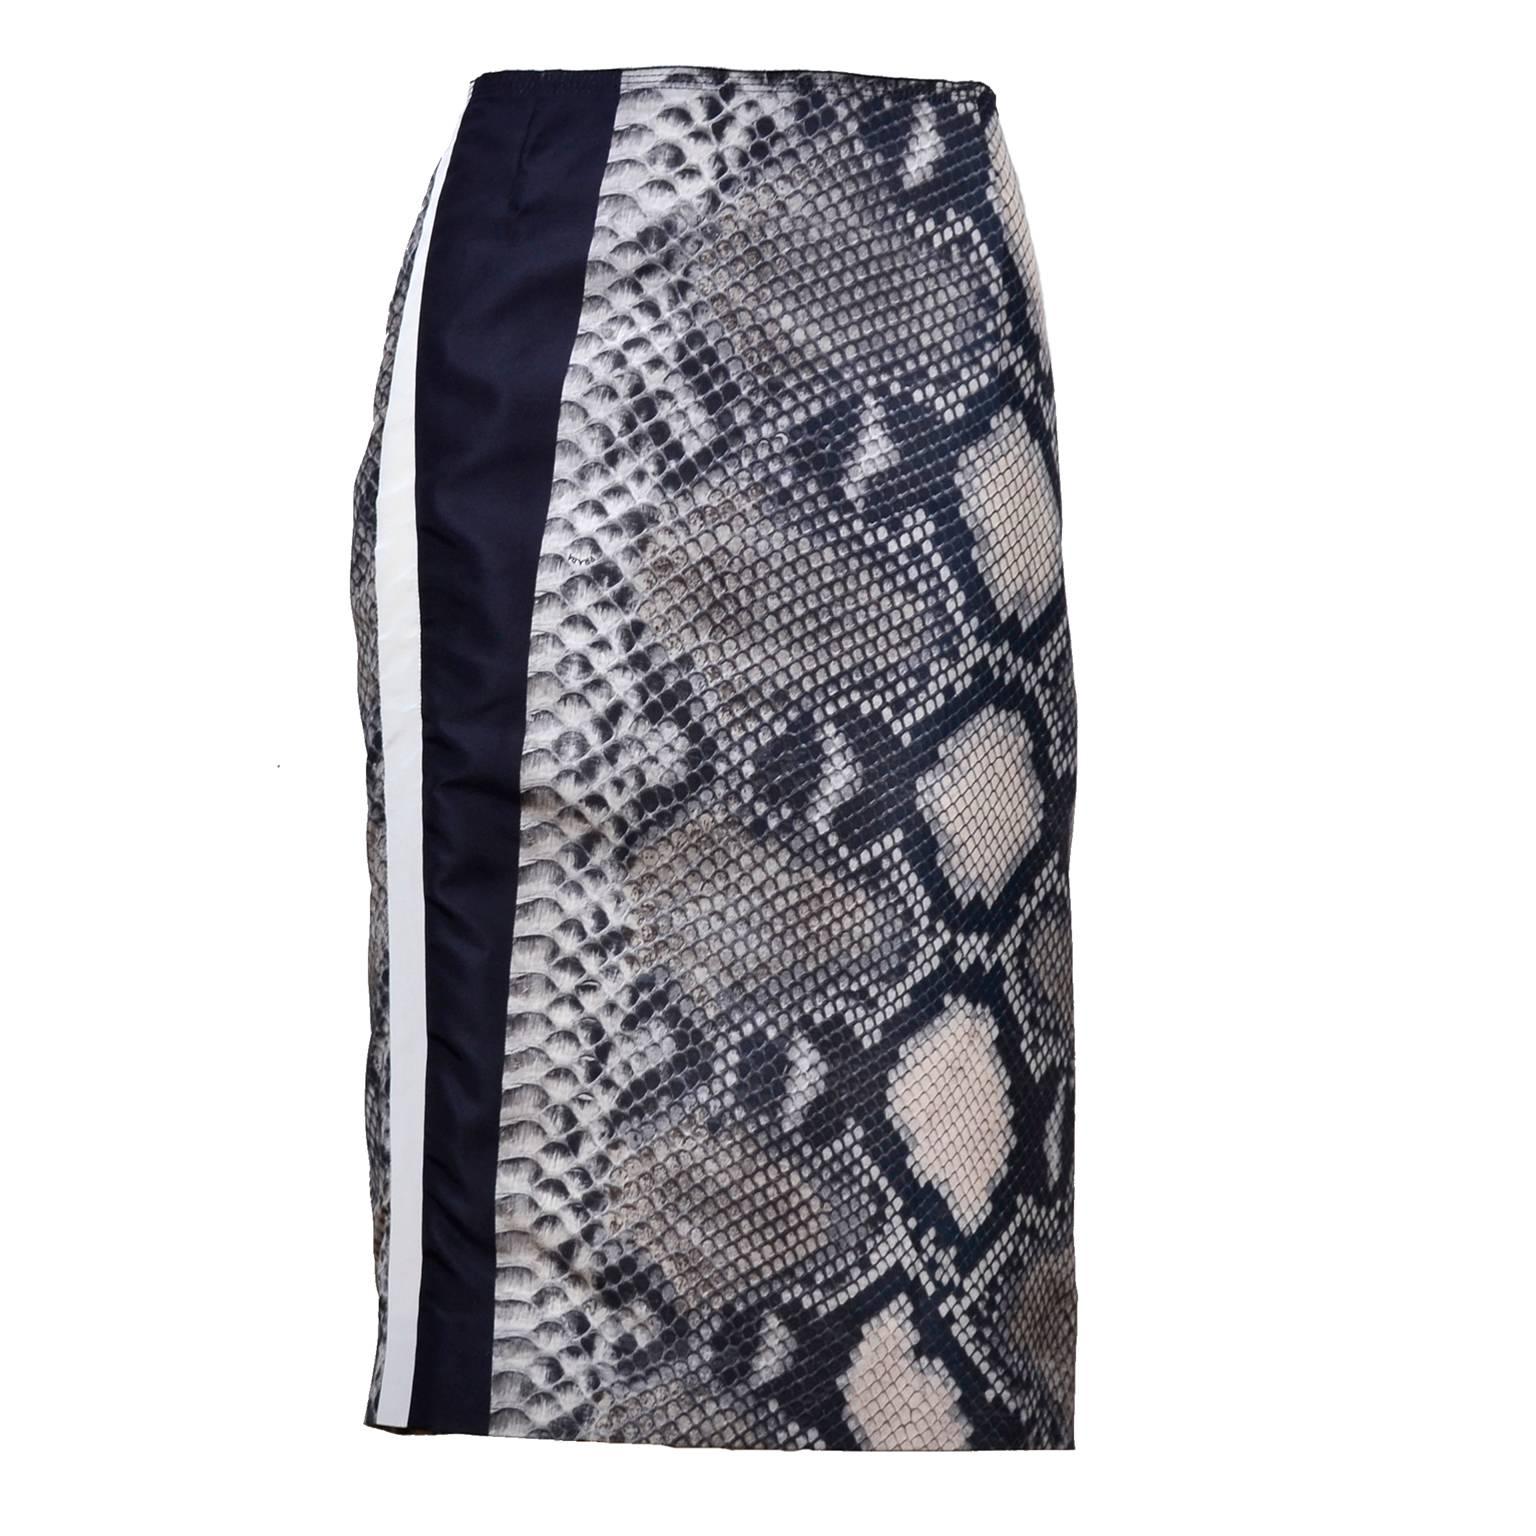 Prada Black and Ivory Snakeskin Print Silk Skirt Size 42 S/S 2009